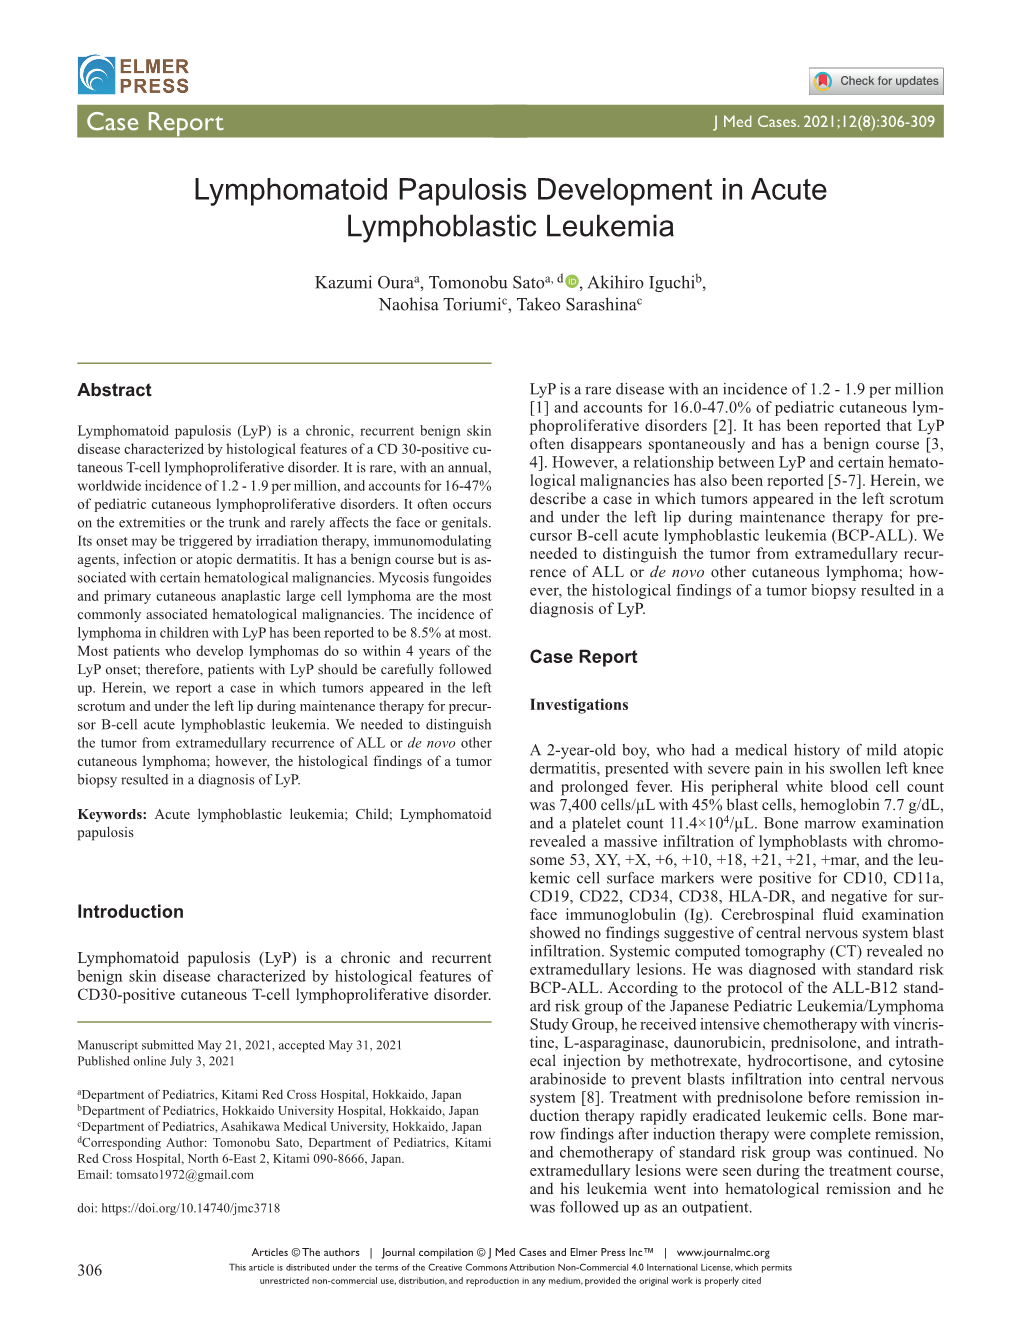 Lymphomatoid Papulosis Development in Acute Lymphoblastic Leukemia